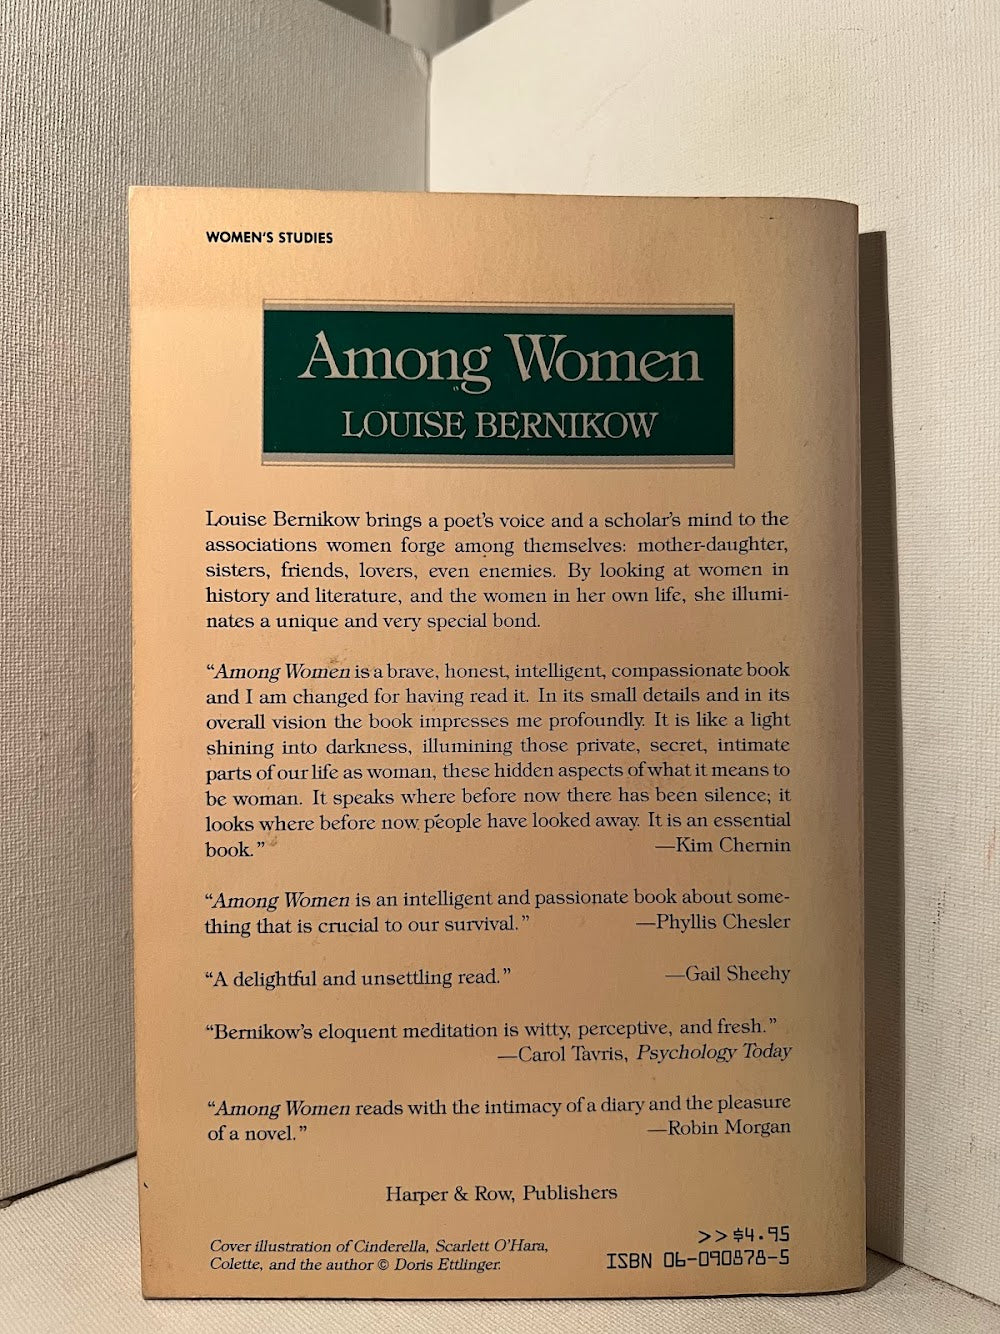 Among Women by Louise Bernikow